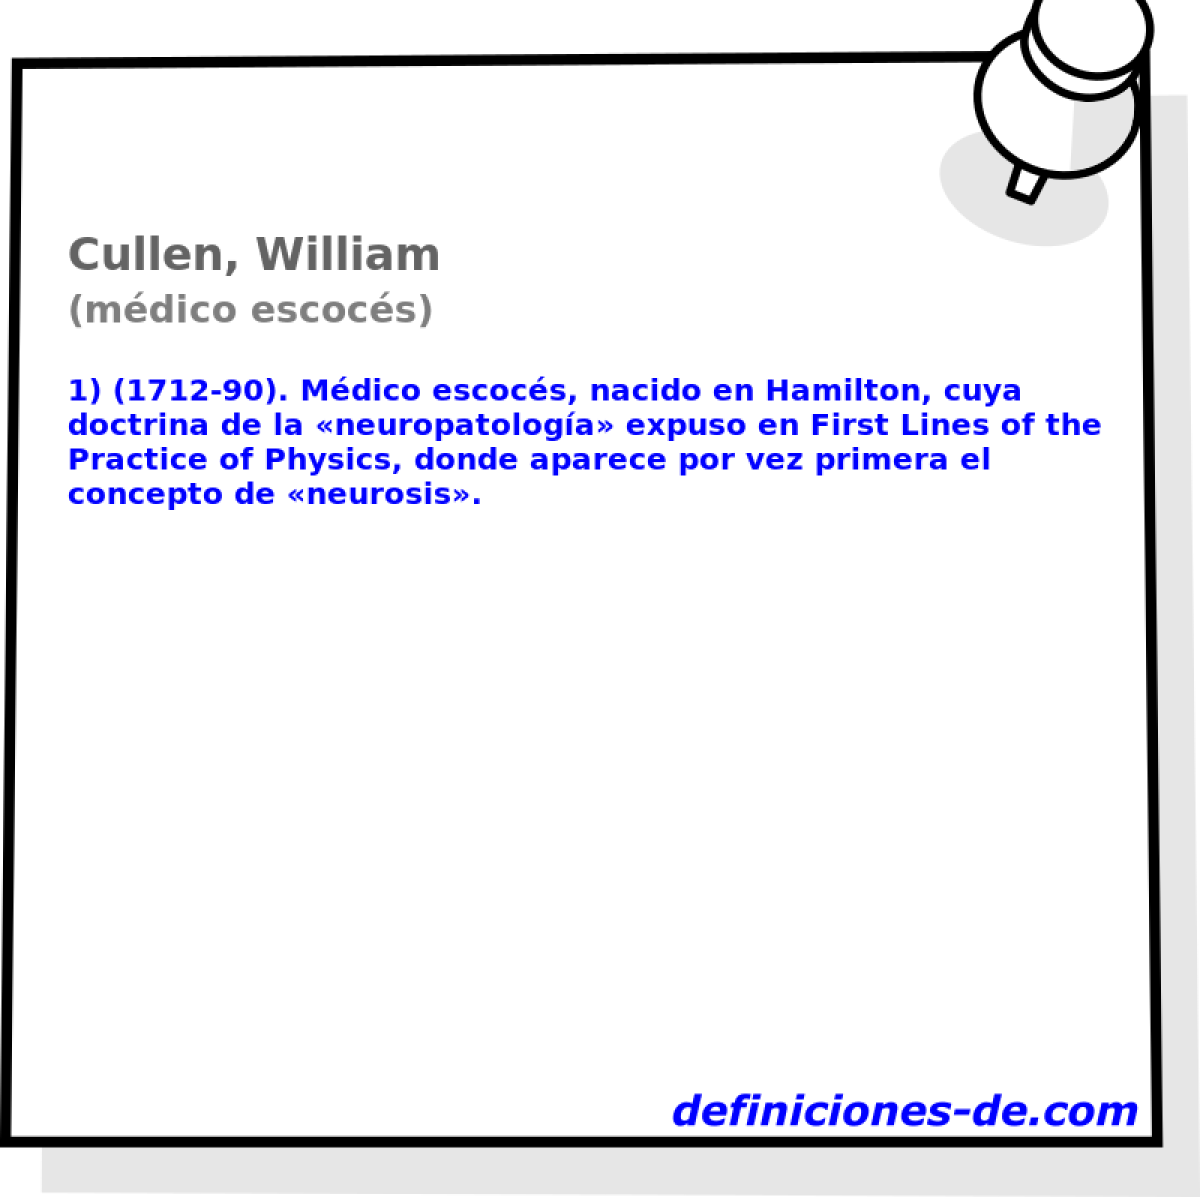 Cullen, William (mdico escocs)